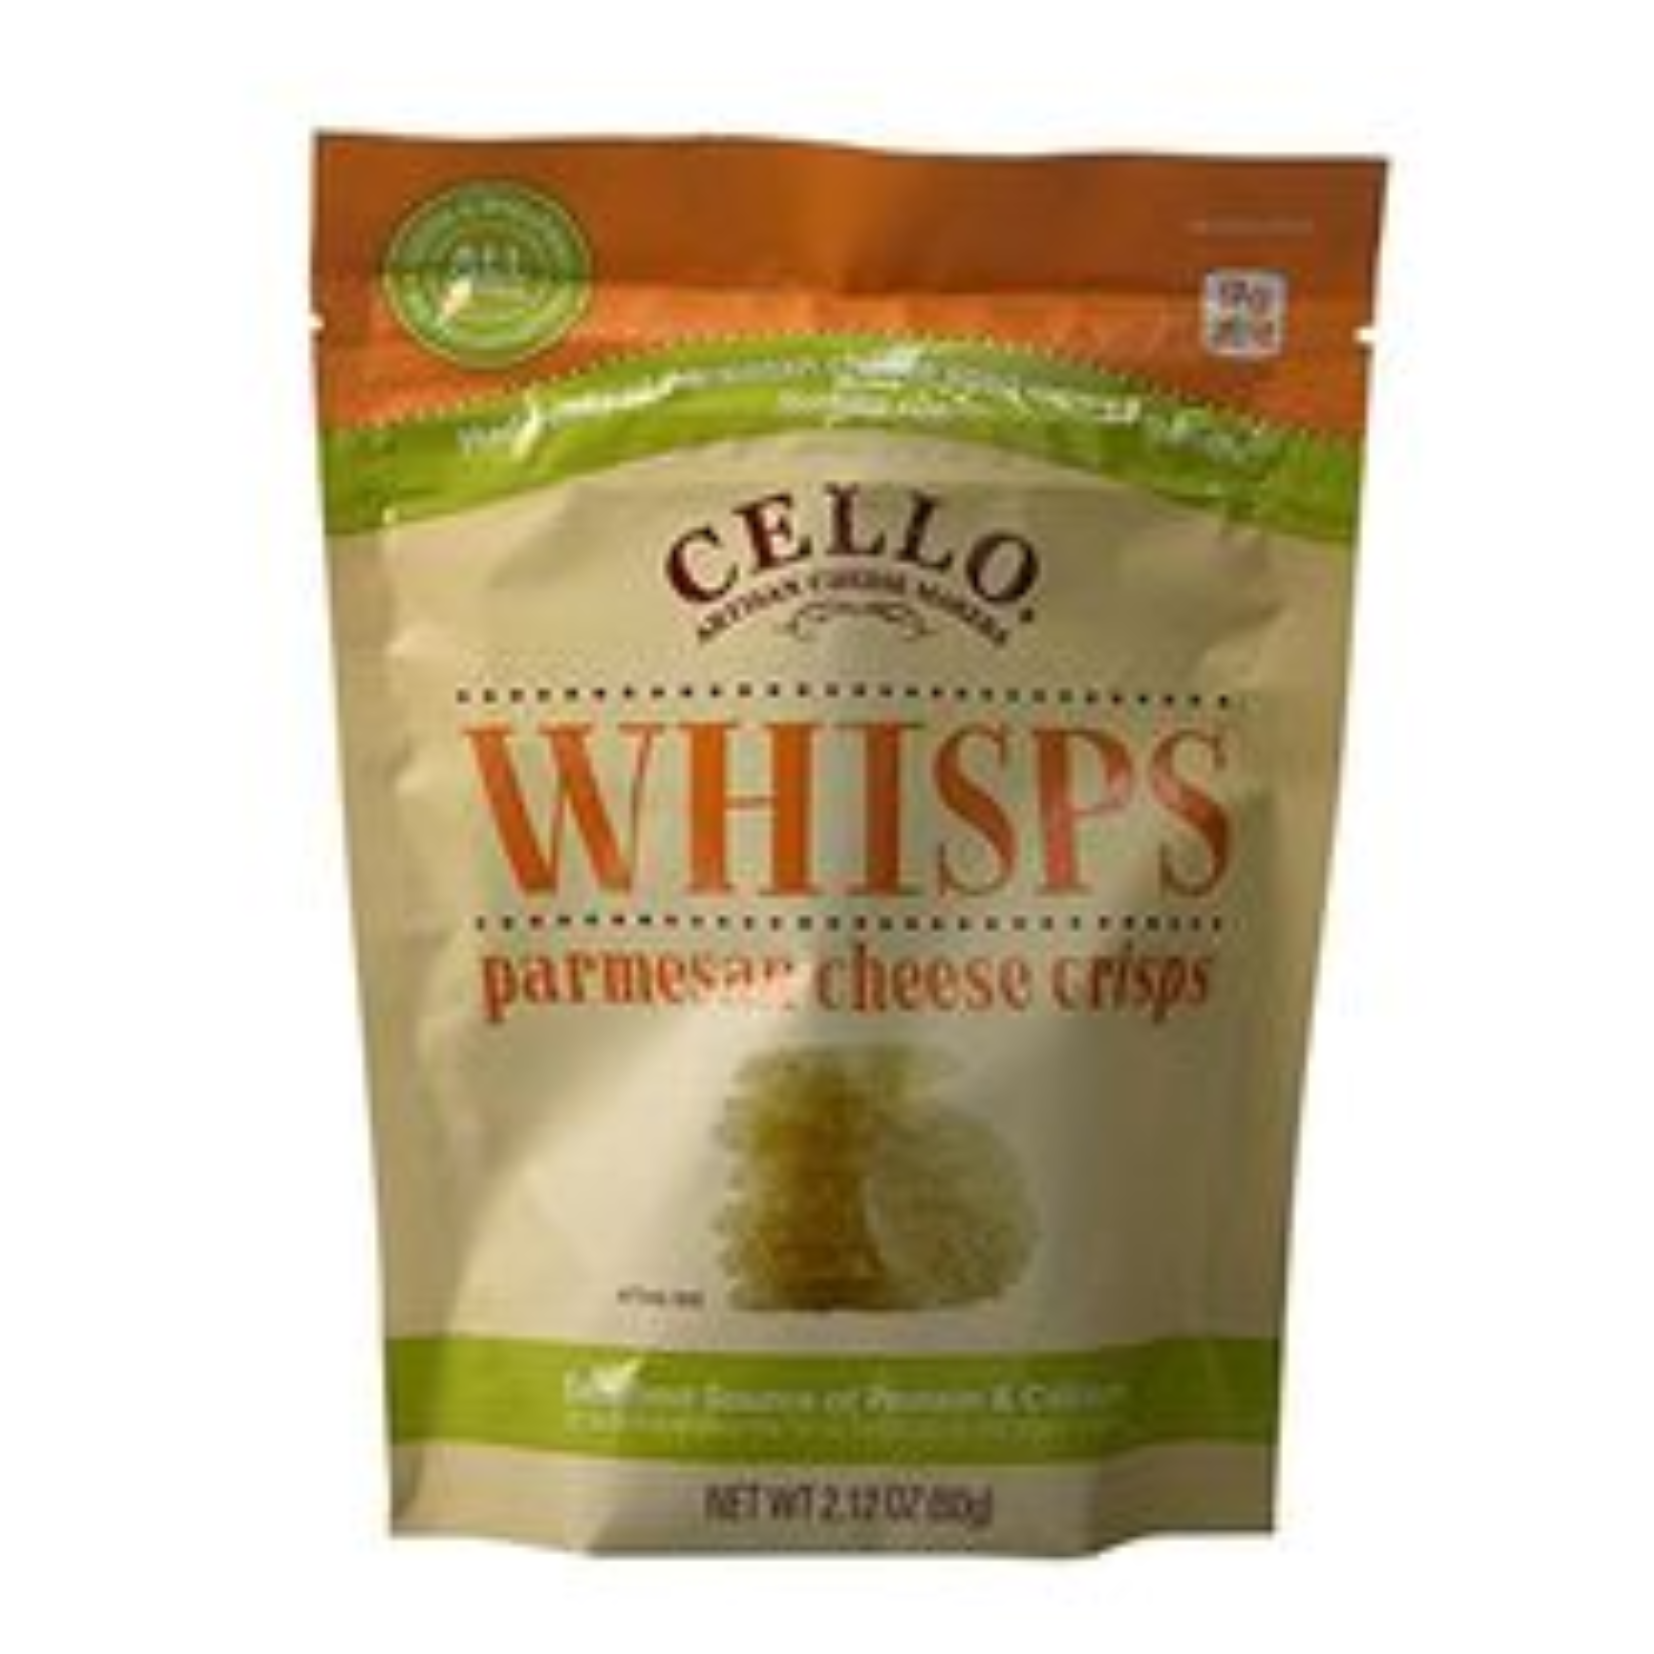 Cello Whisps Parmesan Cheese Crisps 306g